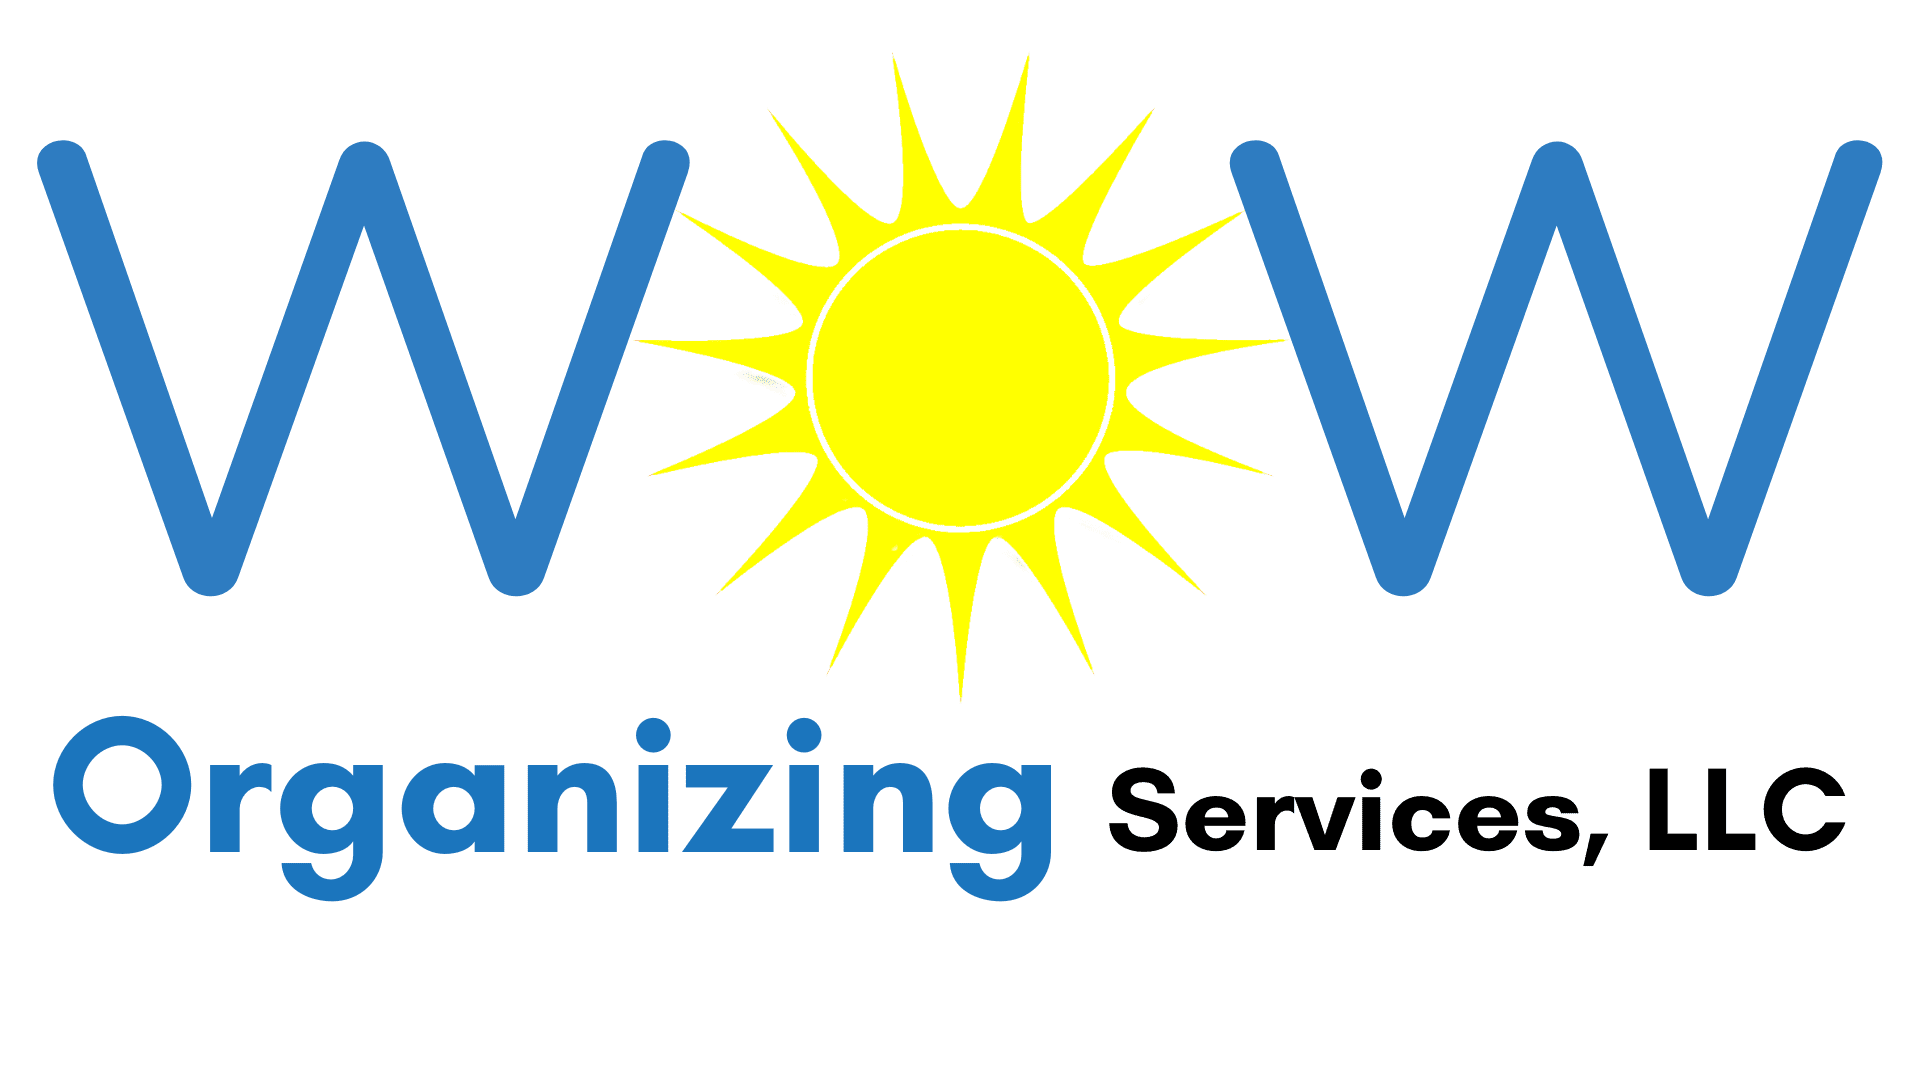 Wow Organizing Services Logo